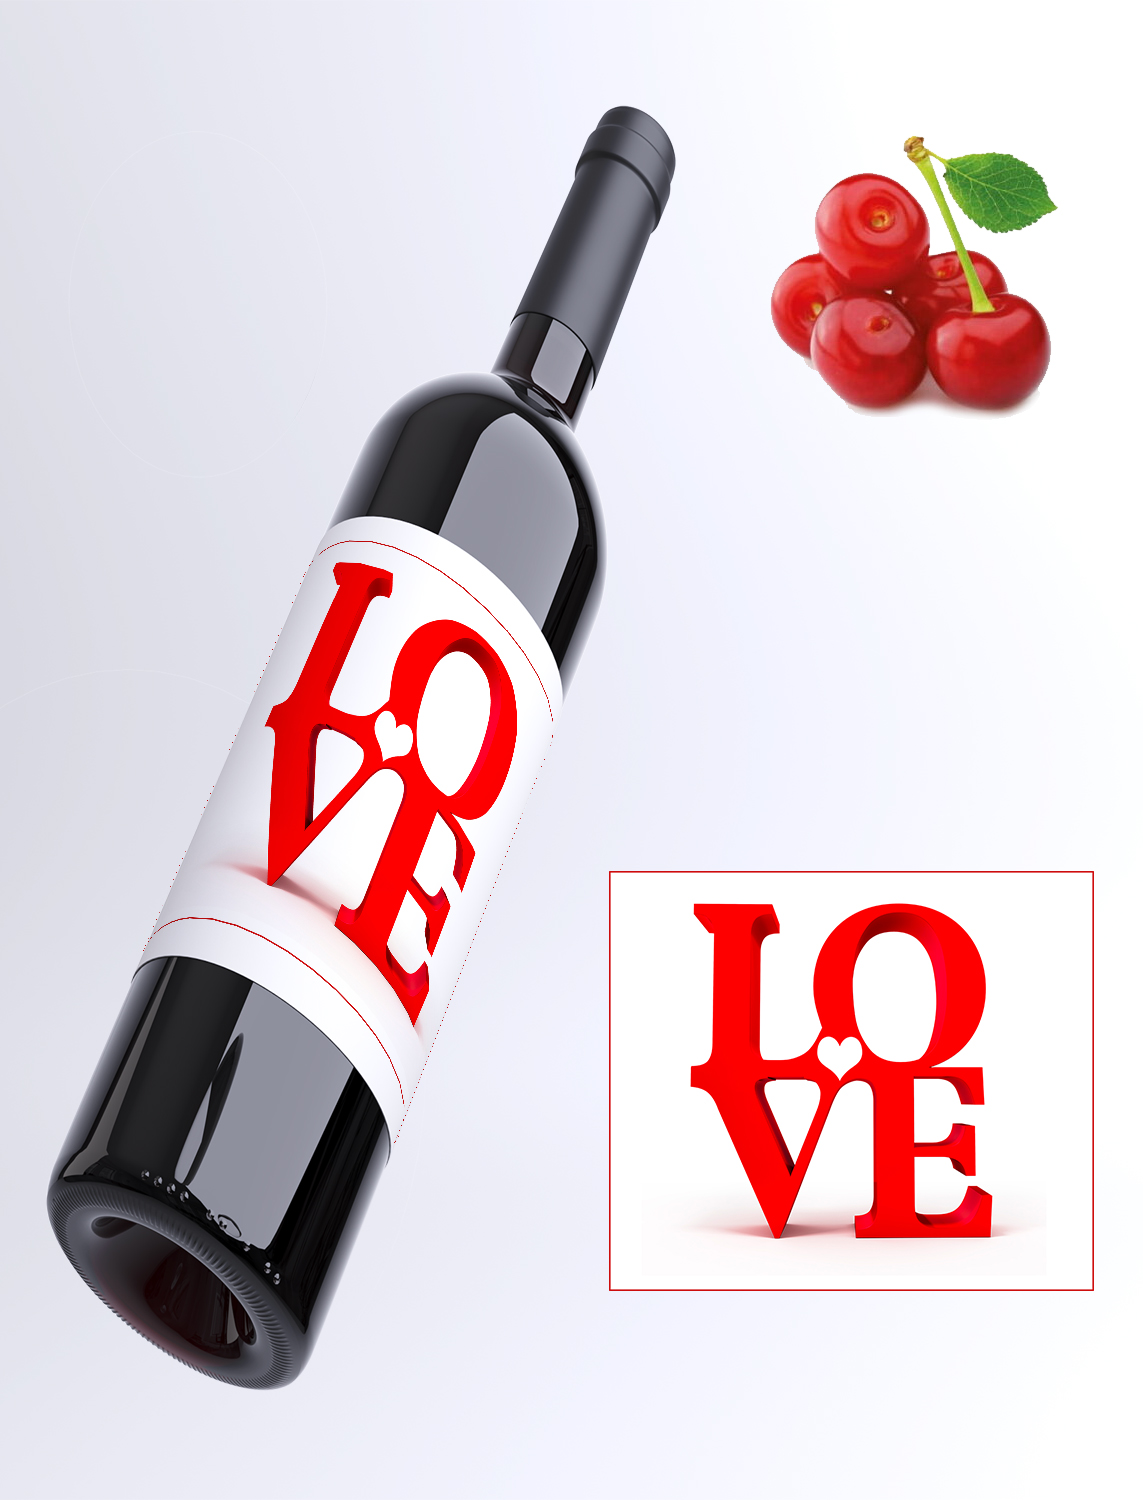 LOVE - Višňové víno 